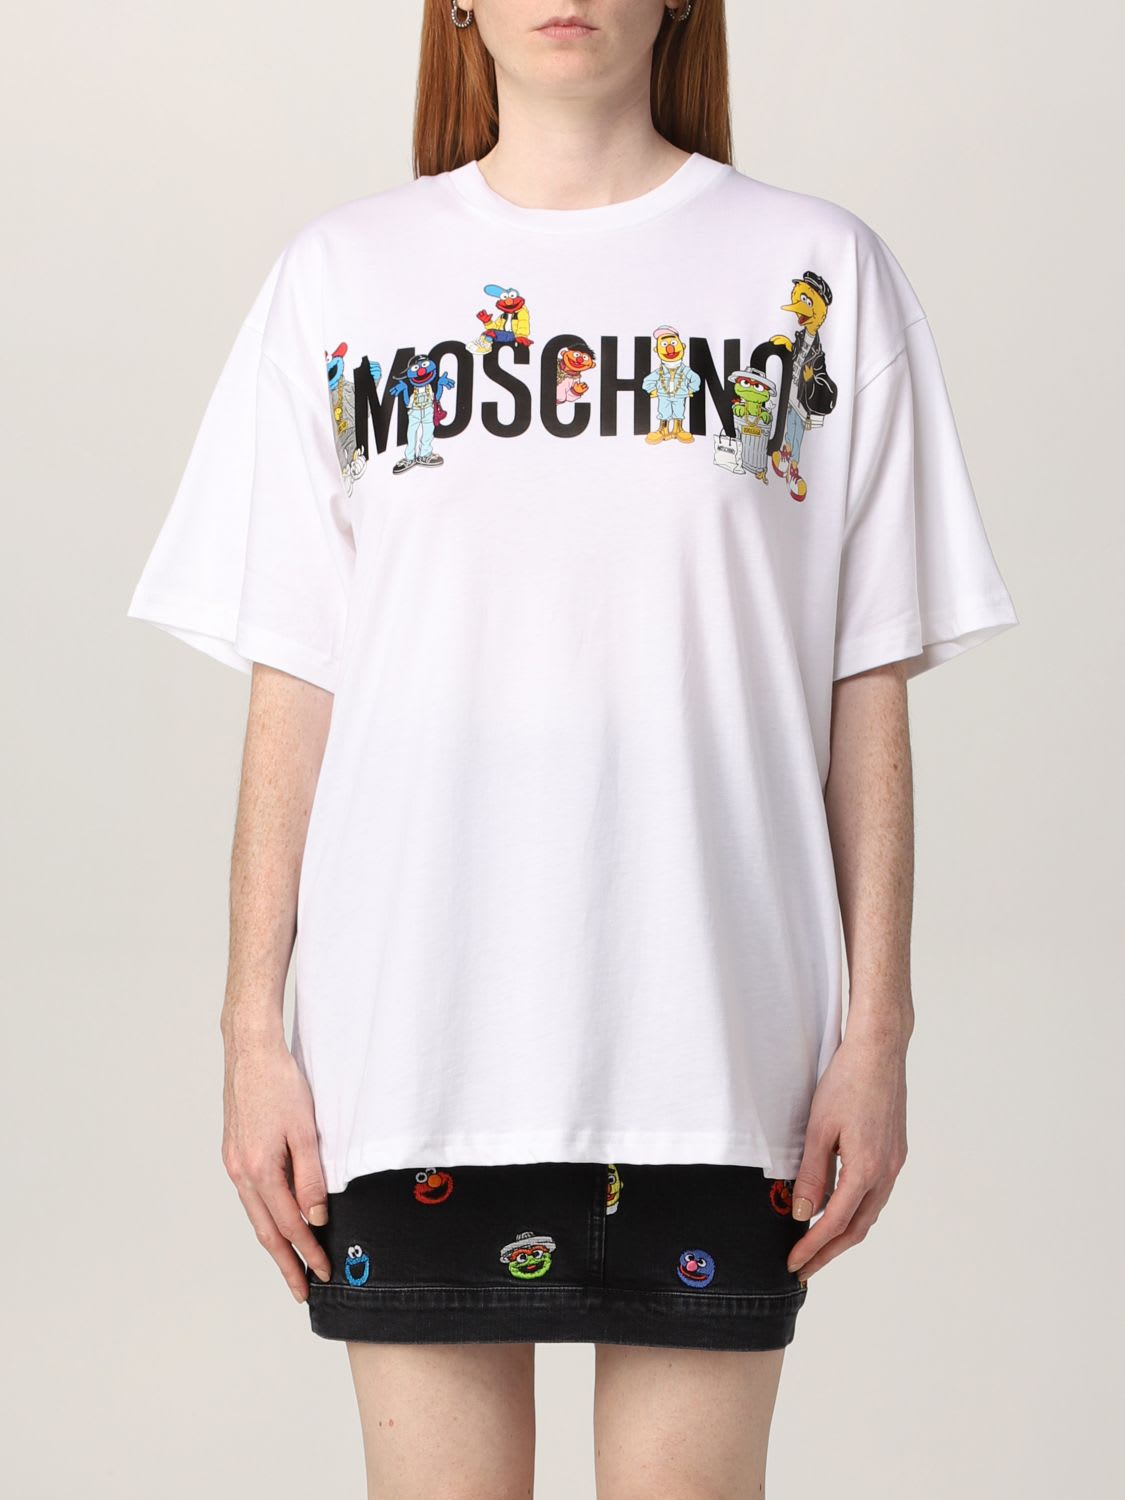 Moschino Couture T-shirt Moschino Couture Sesame Street T-shirt